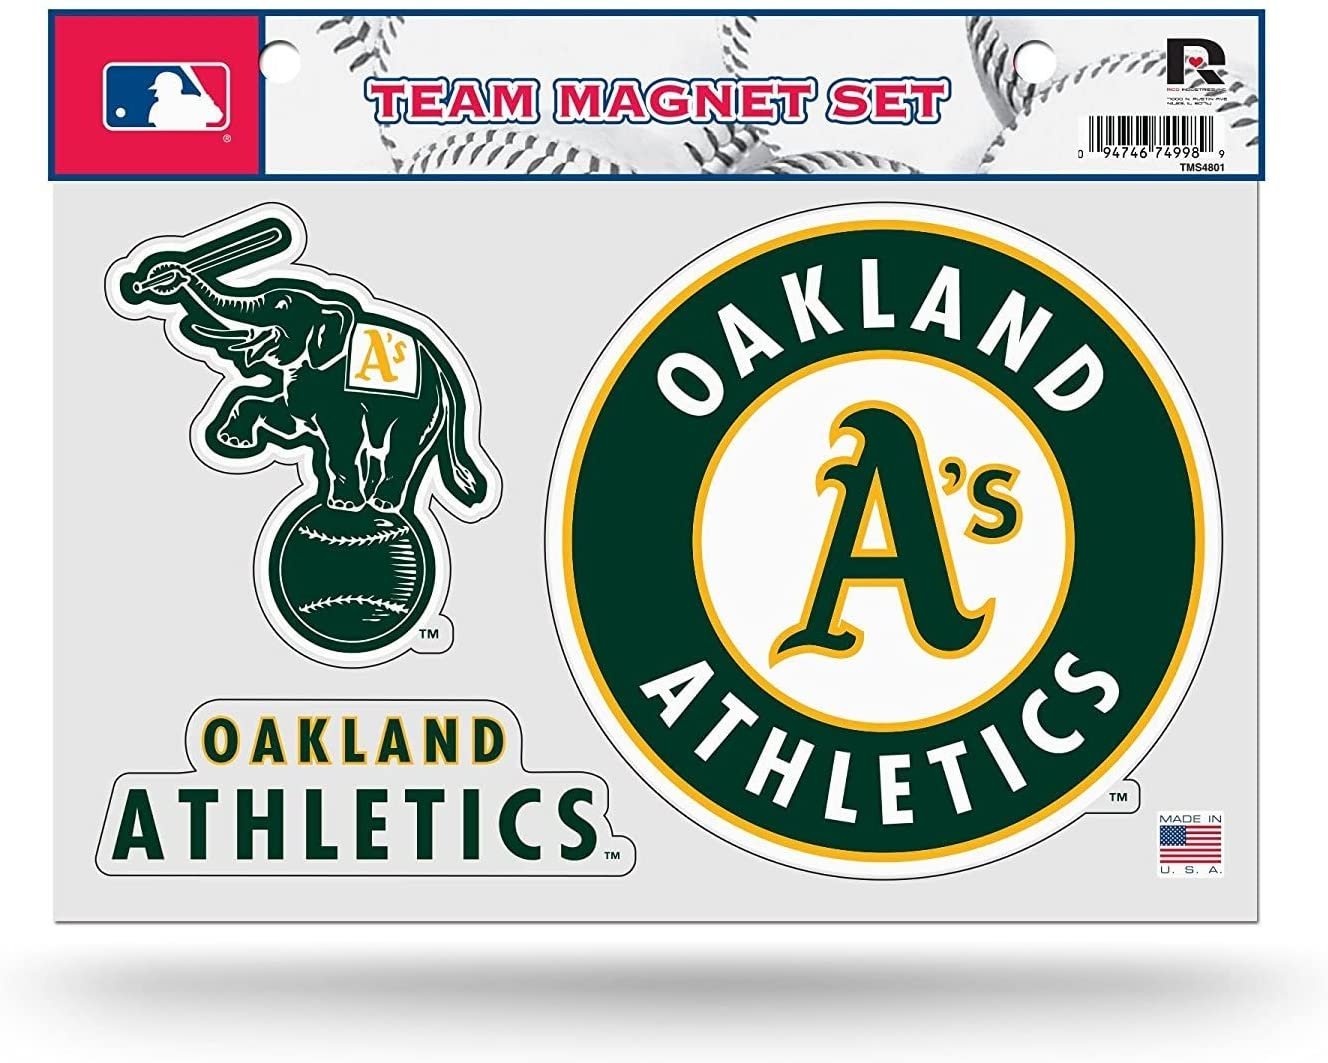 Oakland Athletics A's Multi Magnet Sheet Shape Cut 8x11 Inch